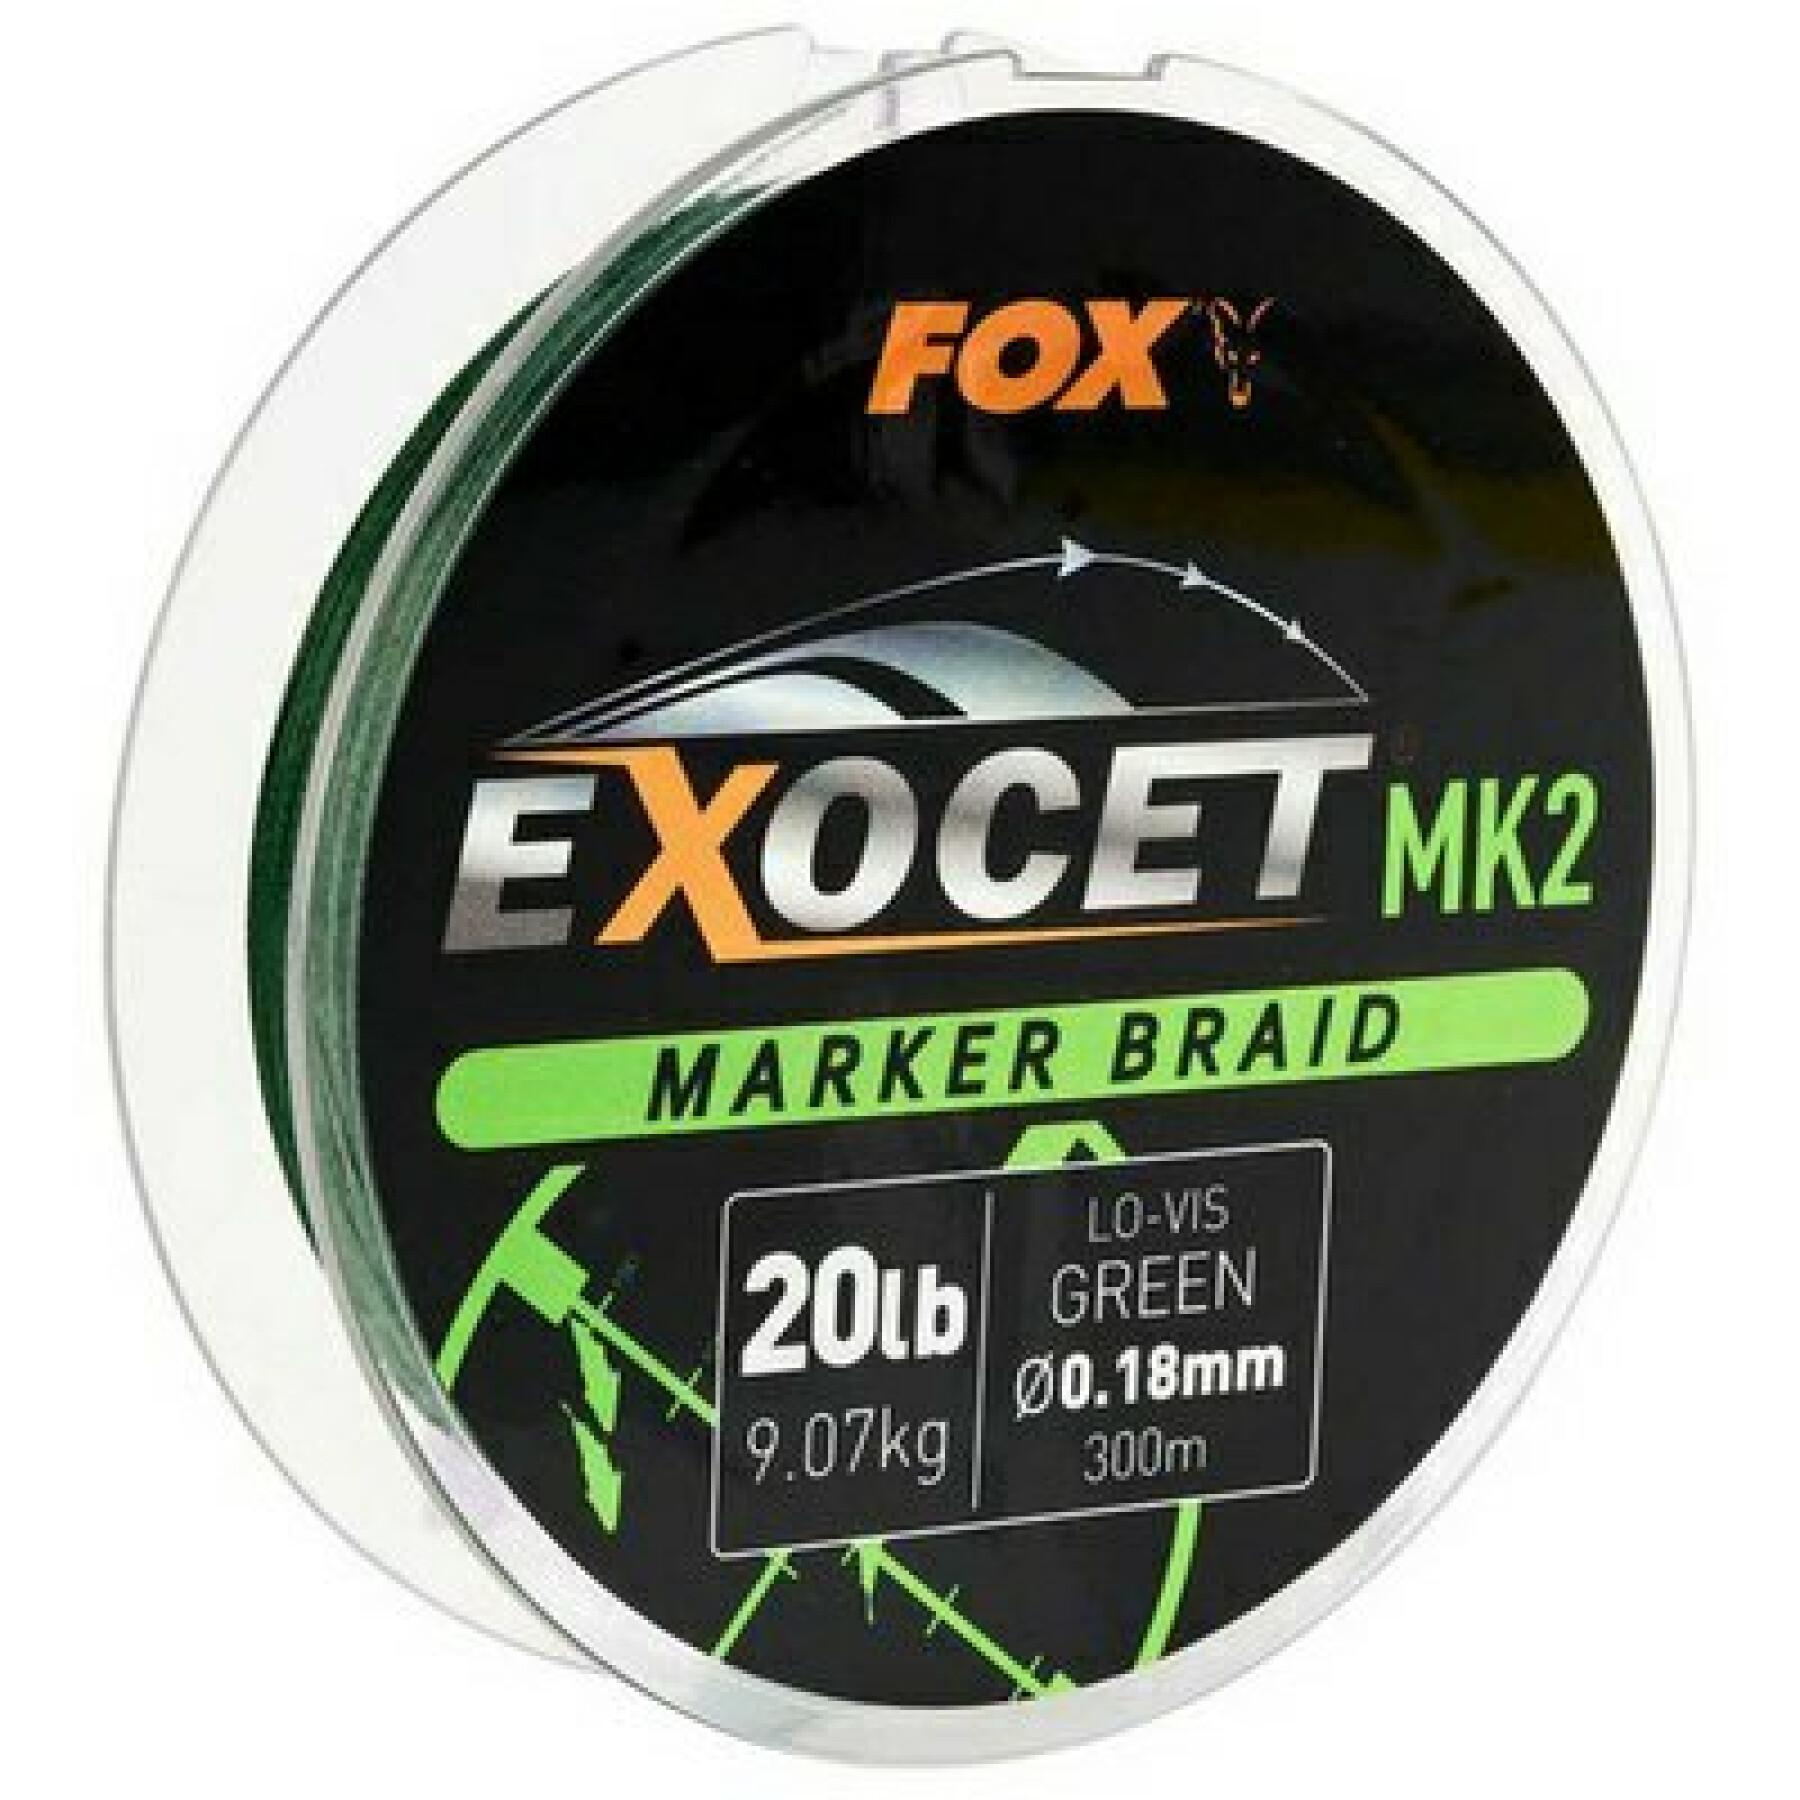 Fox Exocet MK2 Spod and Marker Braid 20lb 